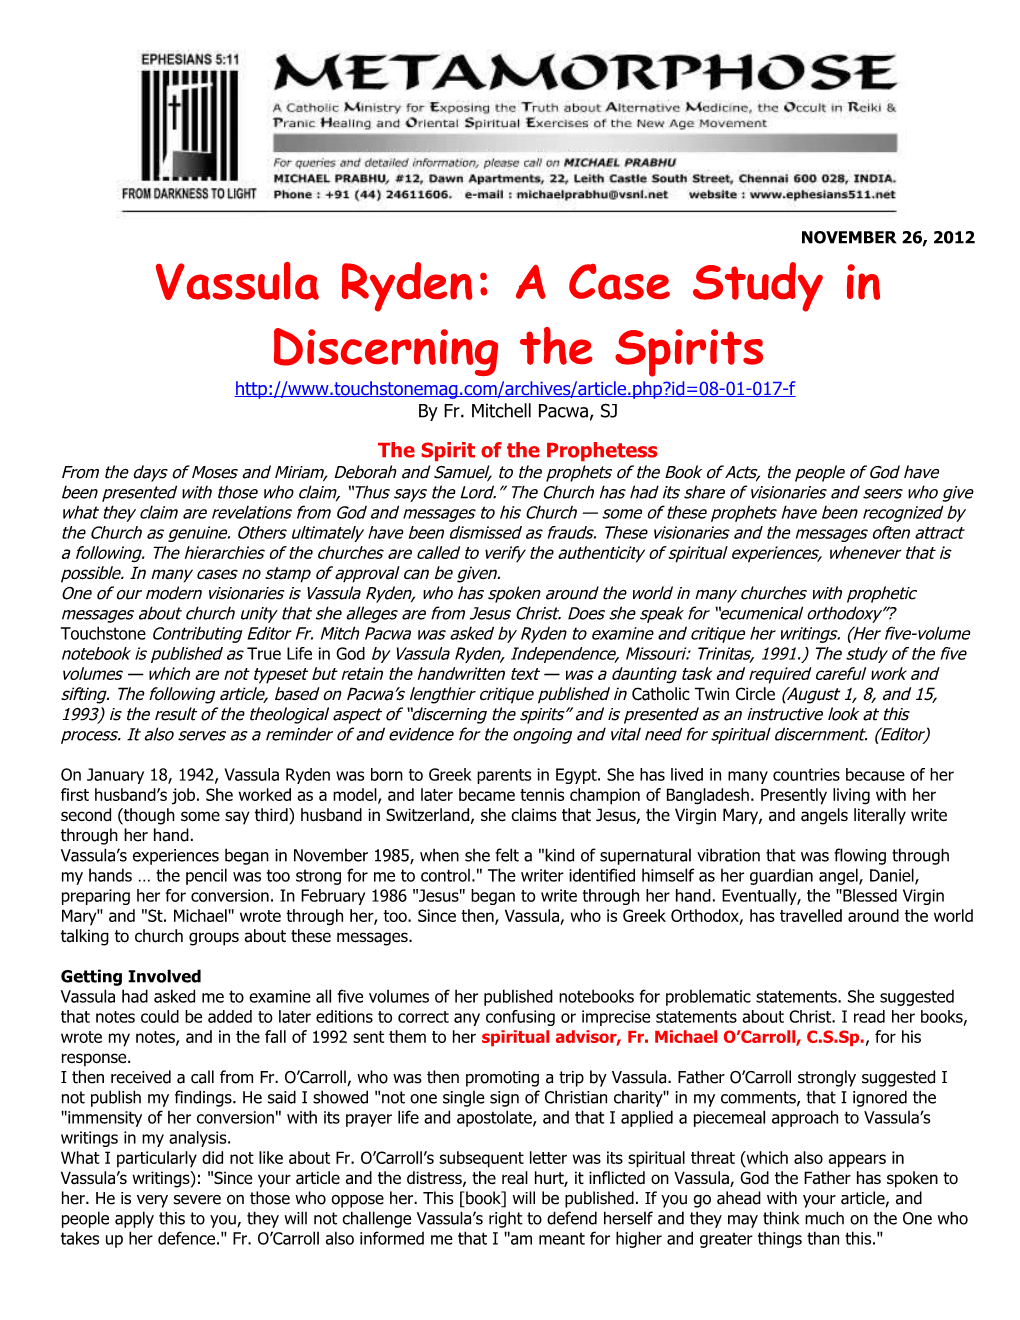 Vassula Ryden: a Case Study in Discerning the Spirits